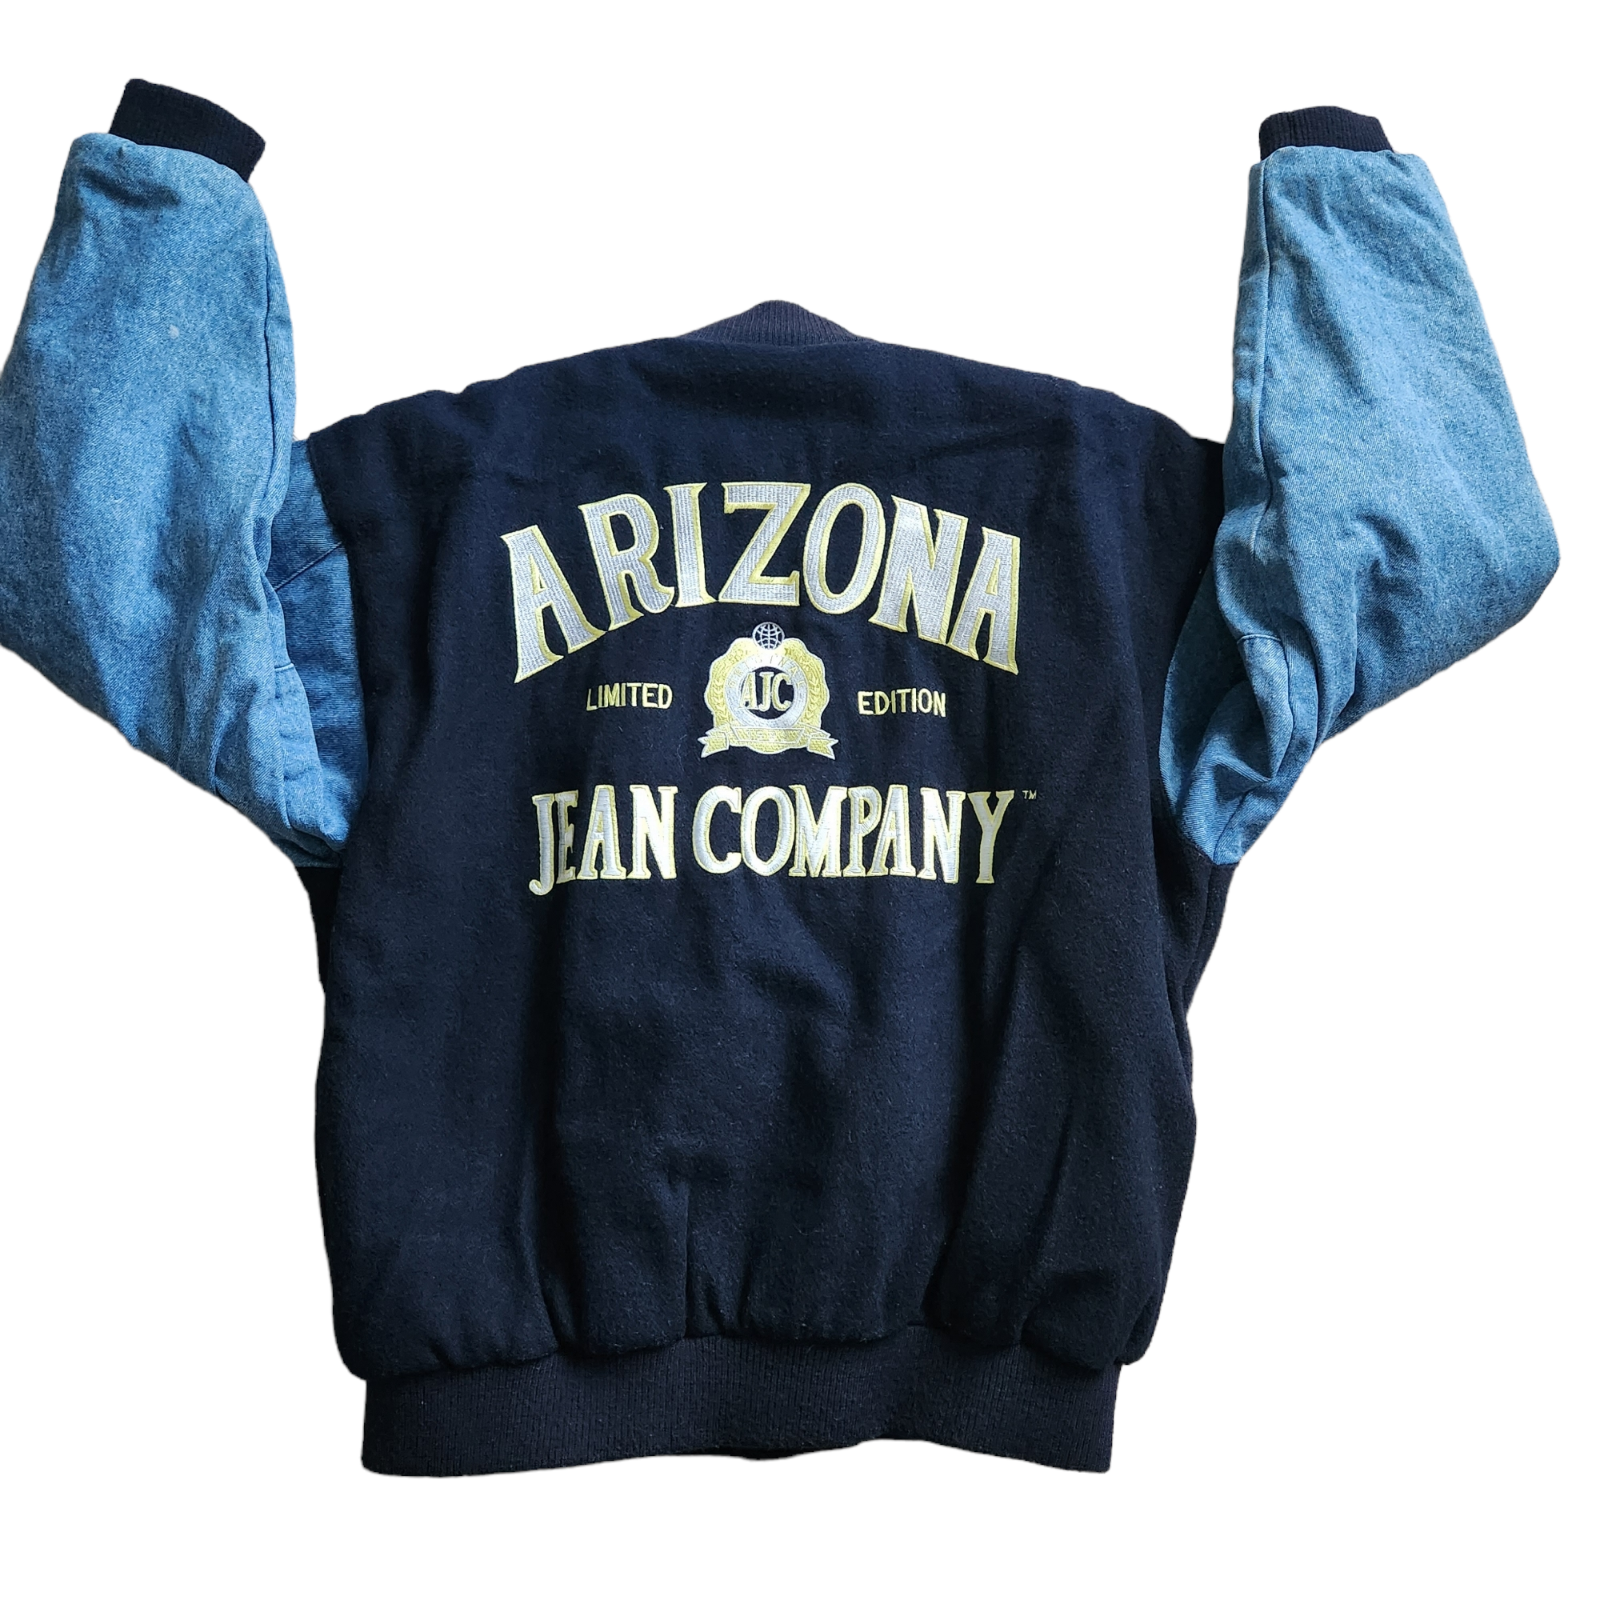 Primary image for Arizona Jean Co. Denim Vintage Limited Ed Varsity Jacket Jean Embroidered Logo